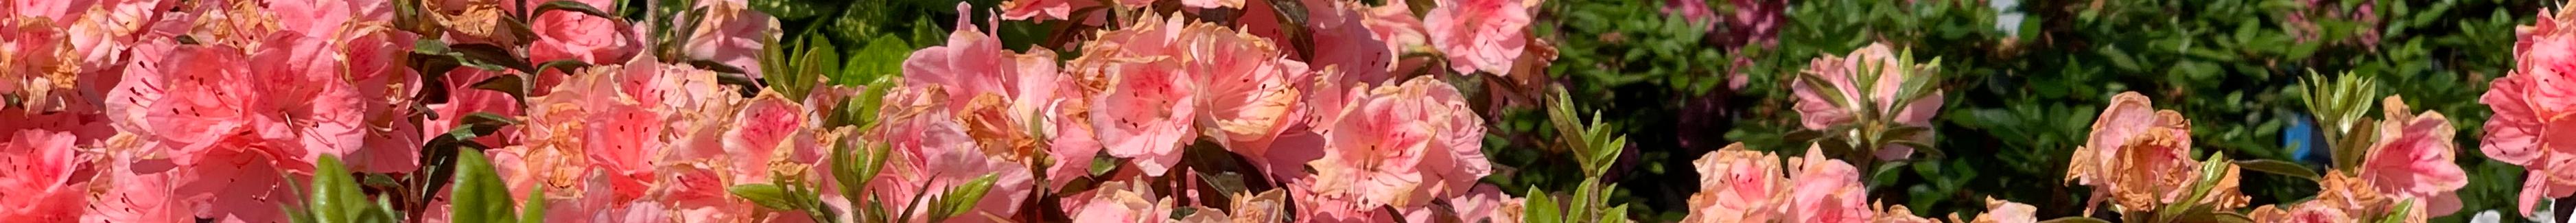 Rhododendron 'Blaauw's Pink' - Gable Hybrid Azalea from Pleasant Run Nursery